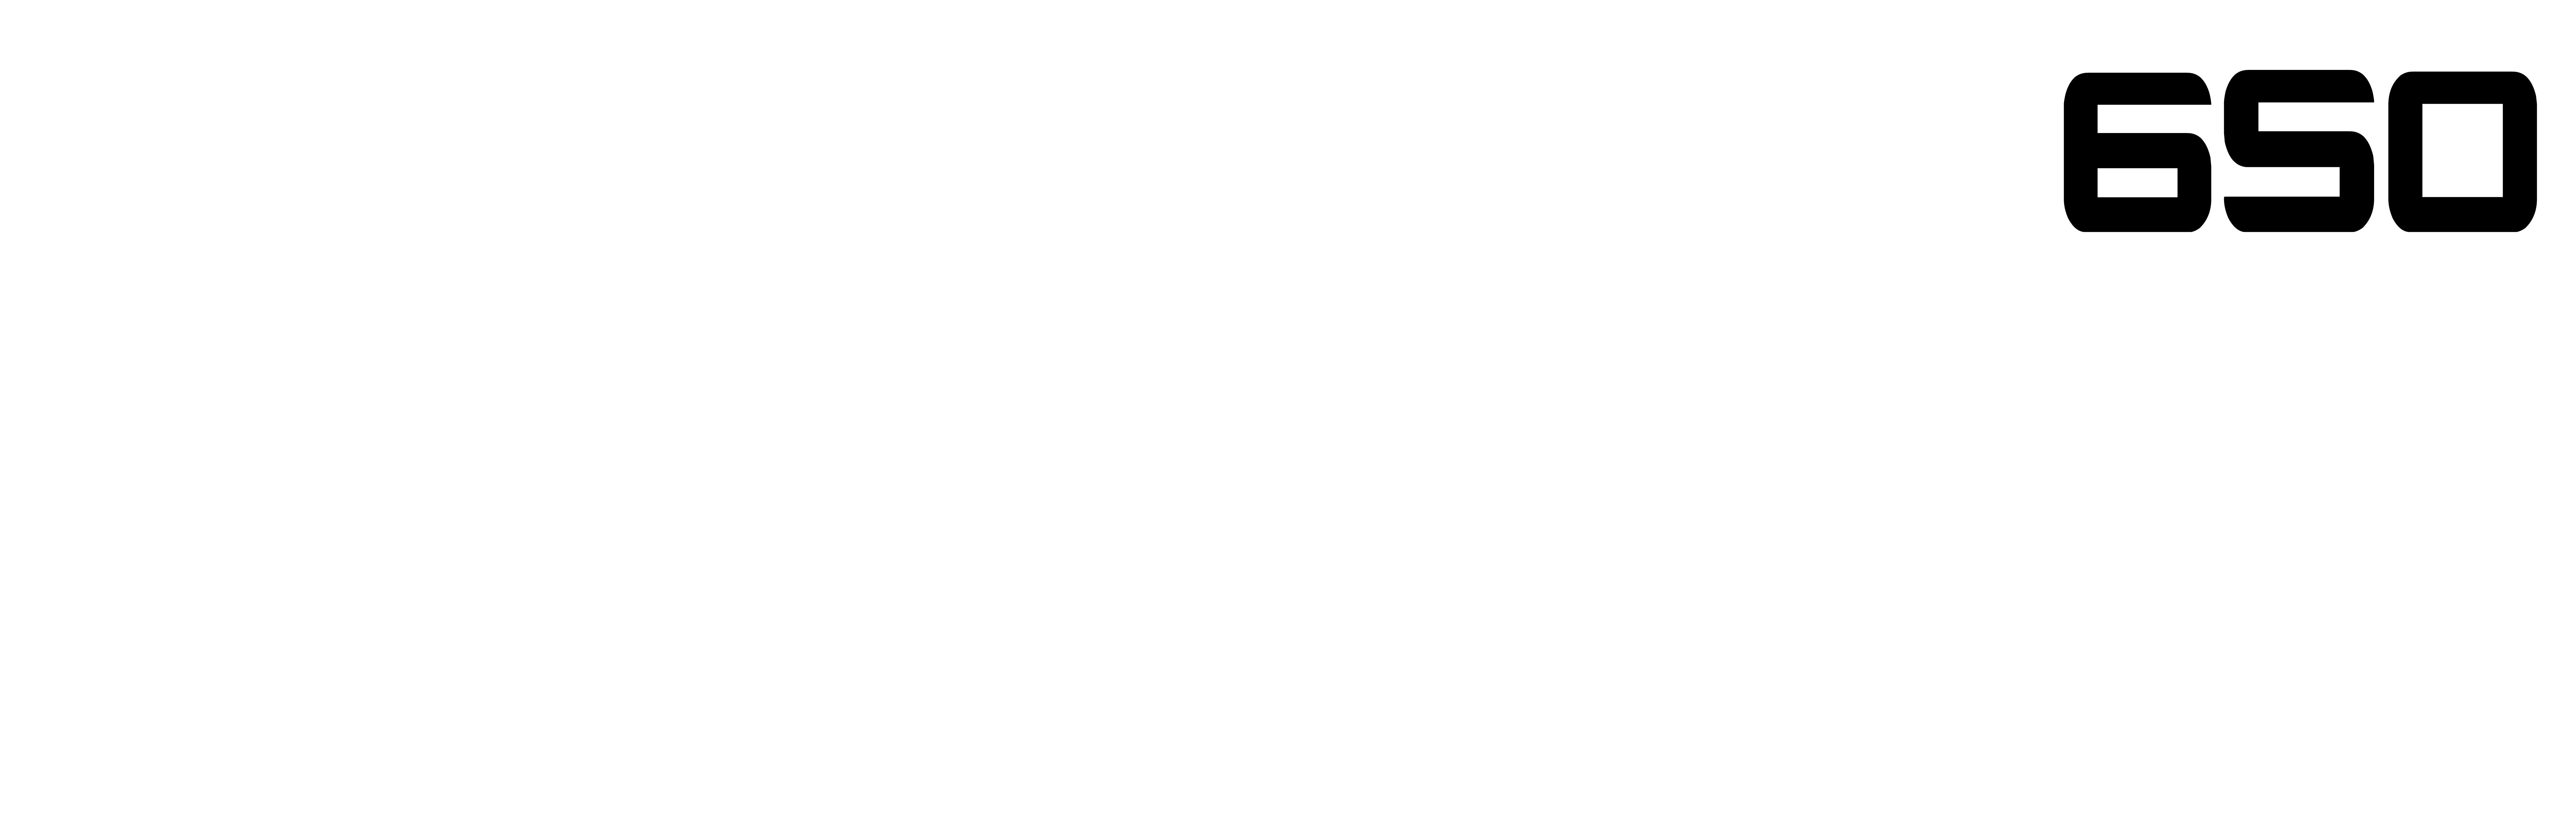 White Shaw 650 logo